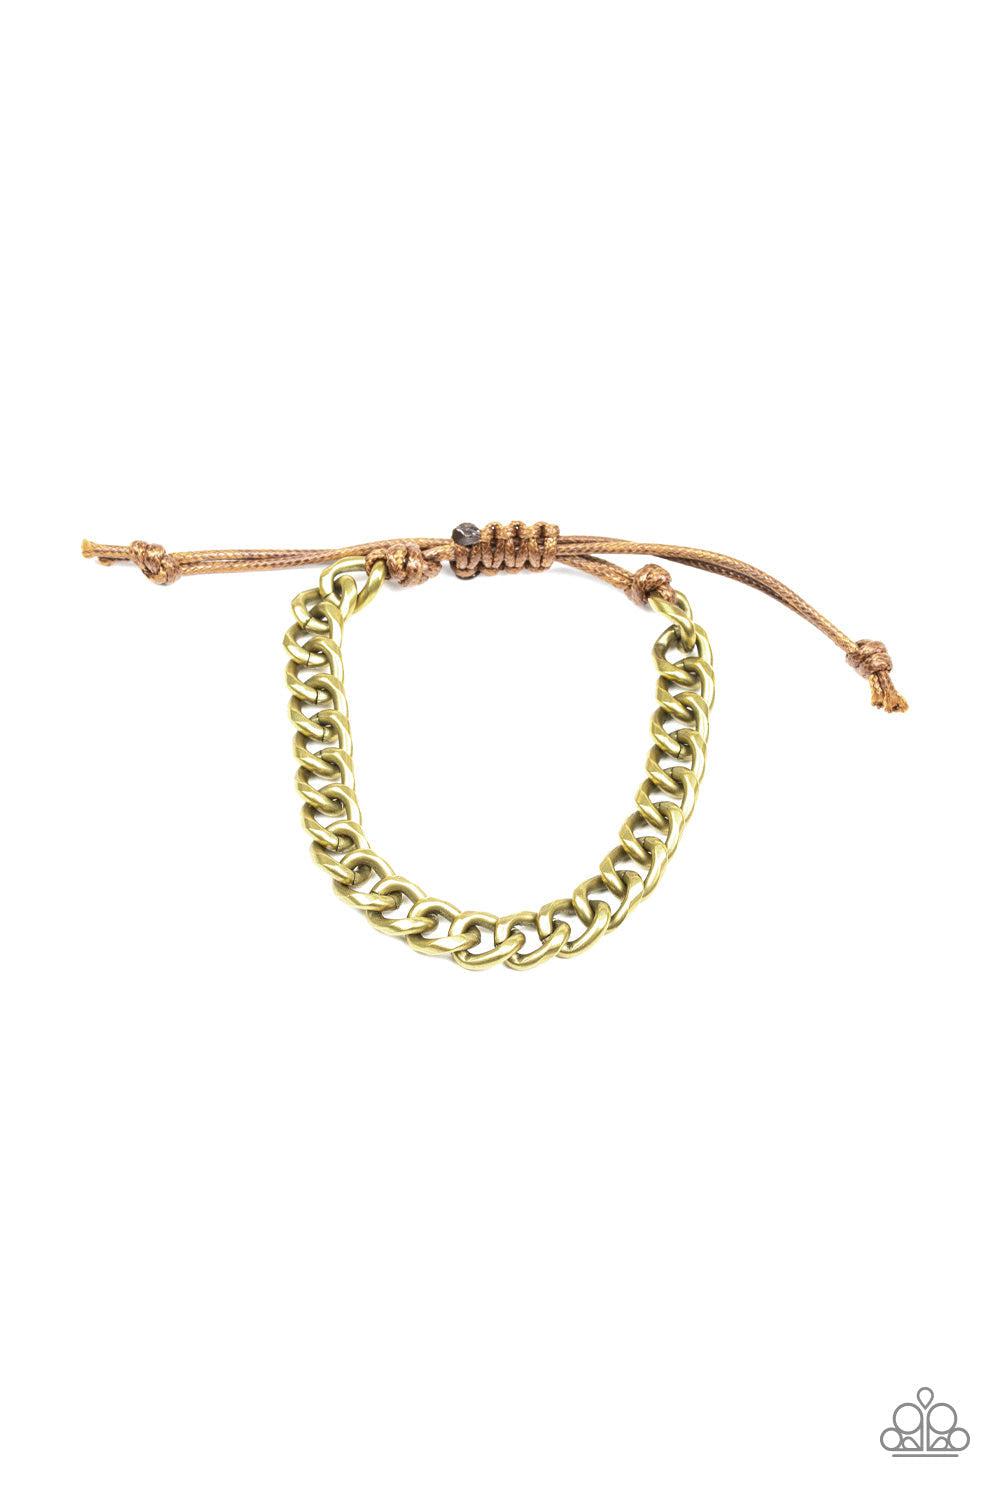 Blitz Men's Brass Urban Bracelet - Paparazzi Accessories- lightbox - CarasShop.com - $5 Jewelry by Cara Jewels